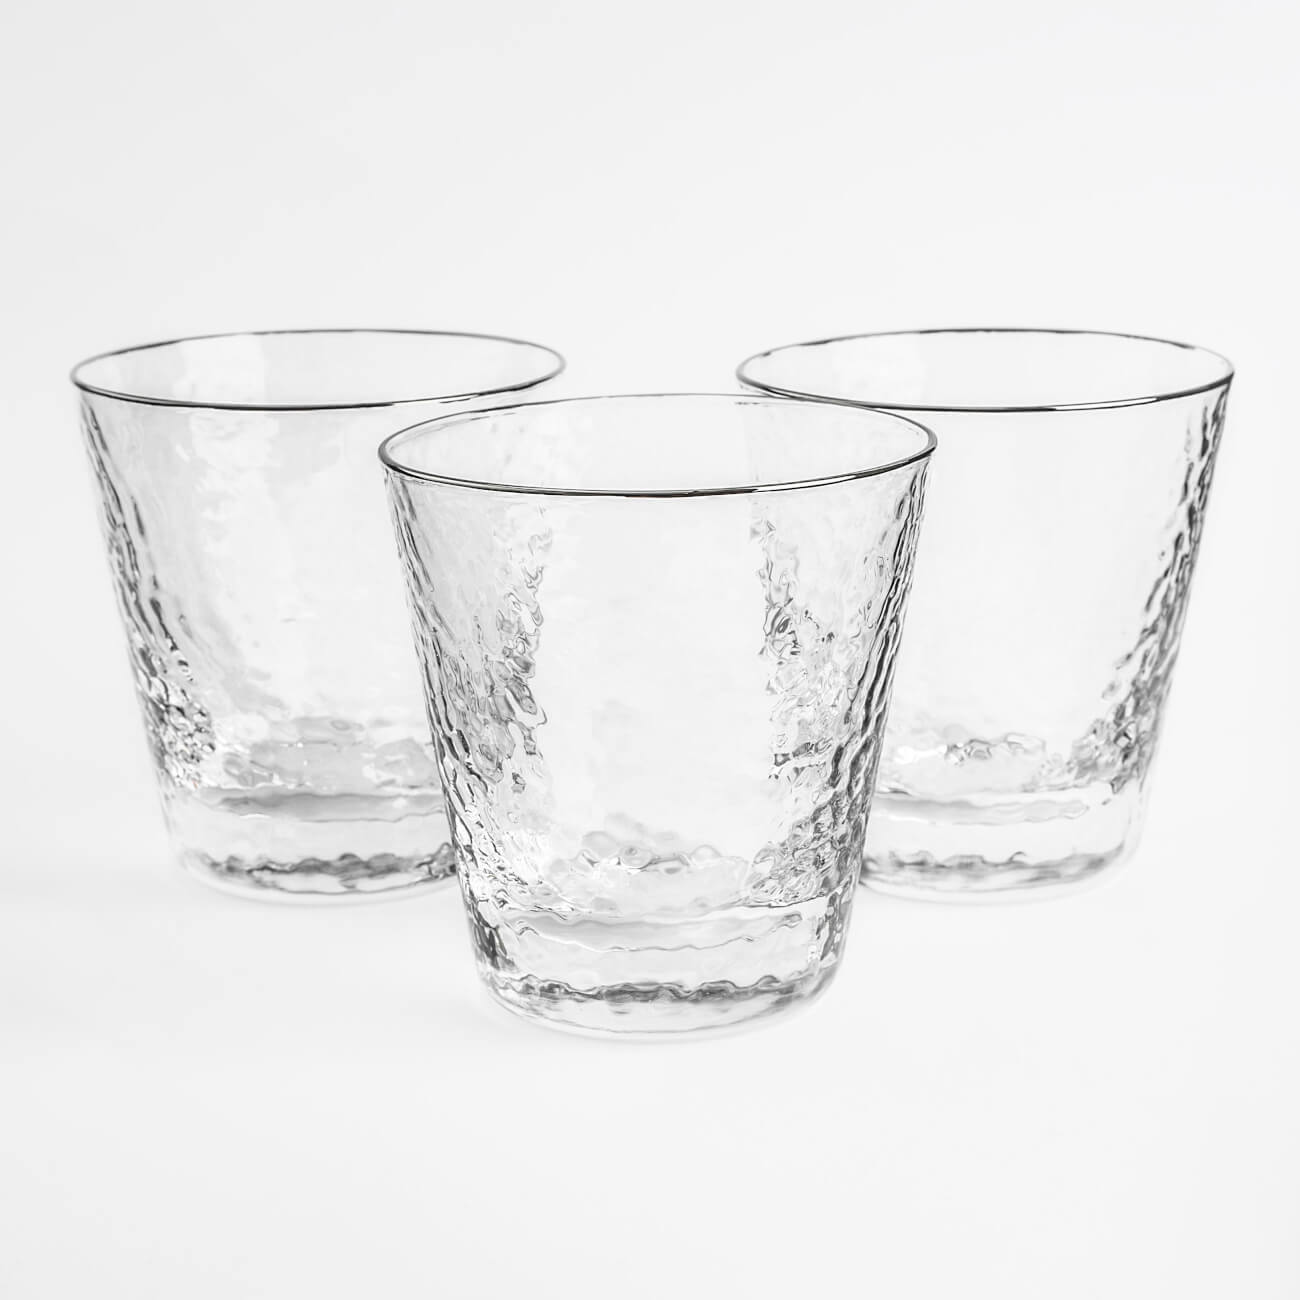 стакан для виски crystalex идеал набор 6 шт стекло 00895 Стакан для виски, 270 мл, 6 шт, стекло, с серебристым кантом, Ripply silver